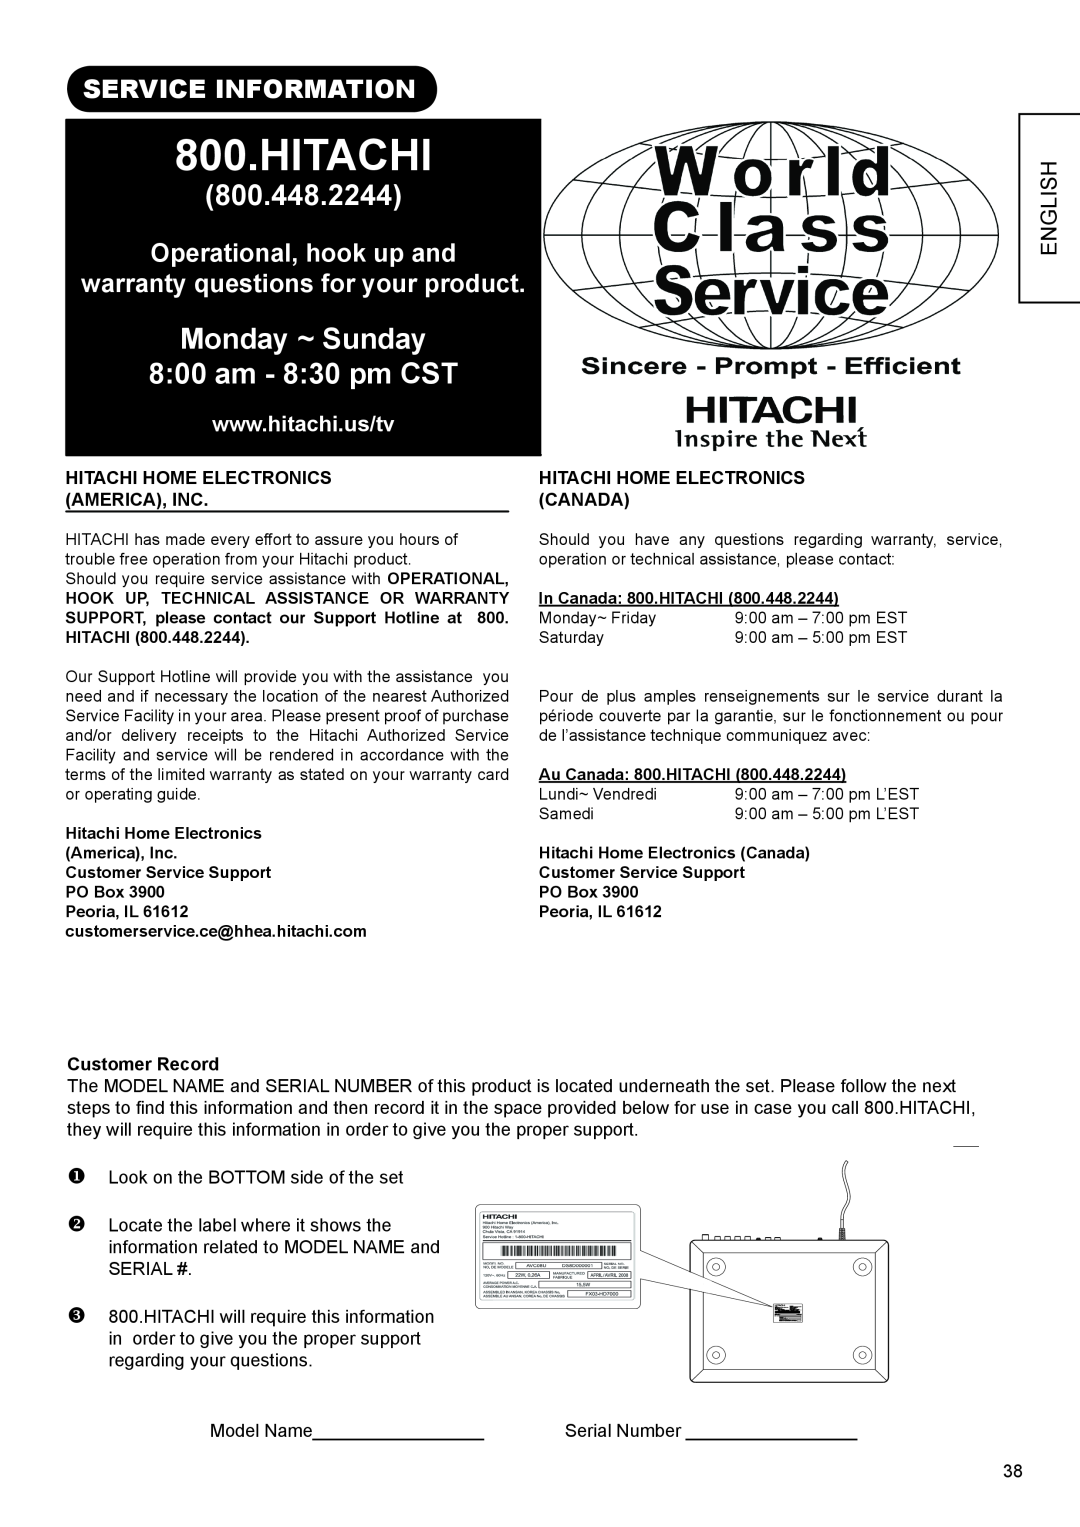 Hitachi AVC01U manual 800.448.2244, Monday ~ Sunday 8 00 am - 8 30 pm CST, English, Hitachi Home Electronics Canada 